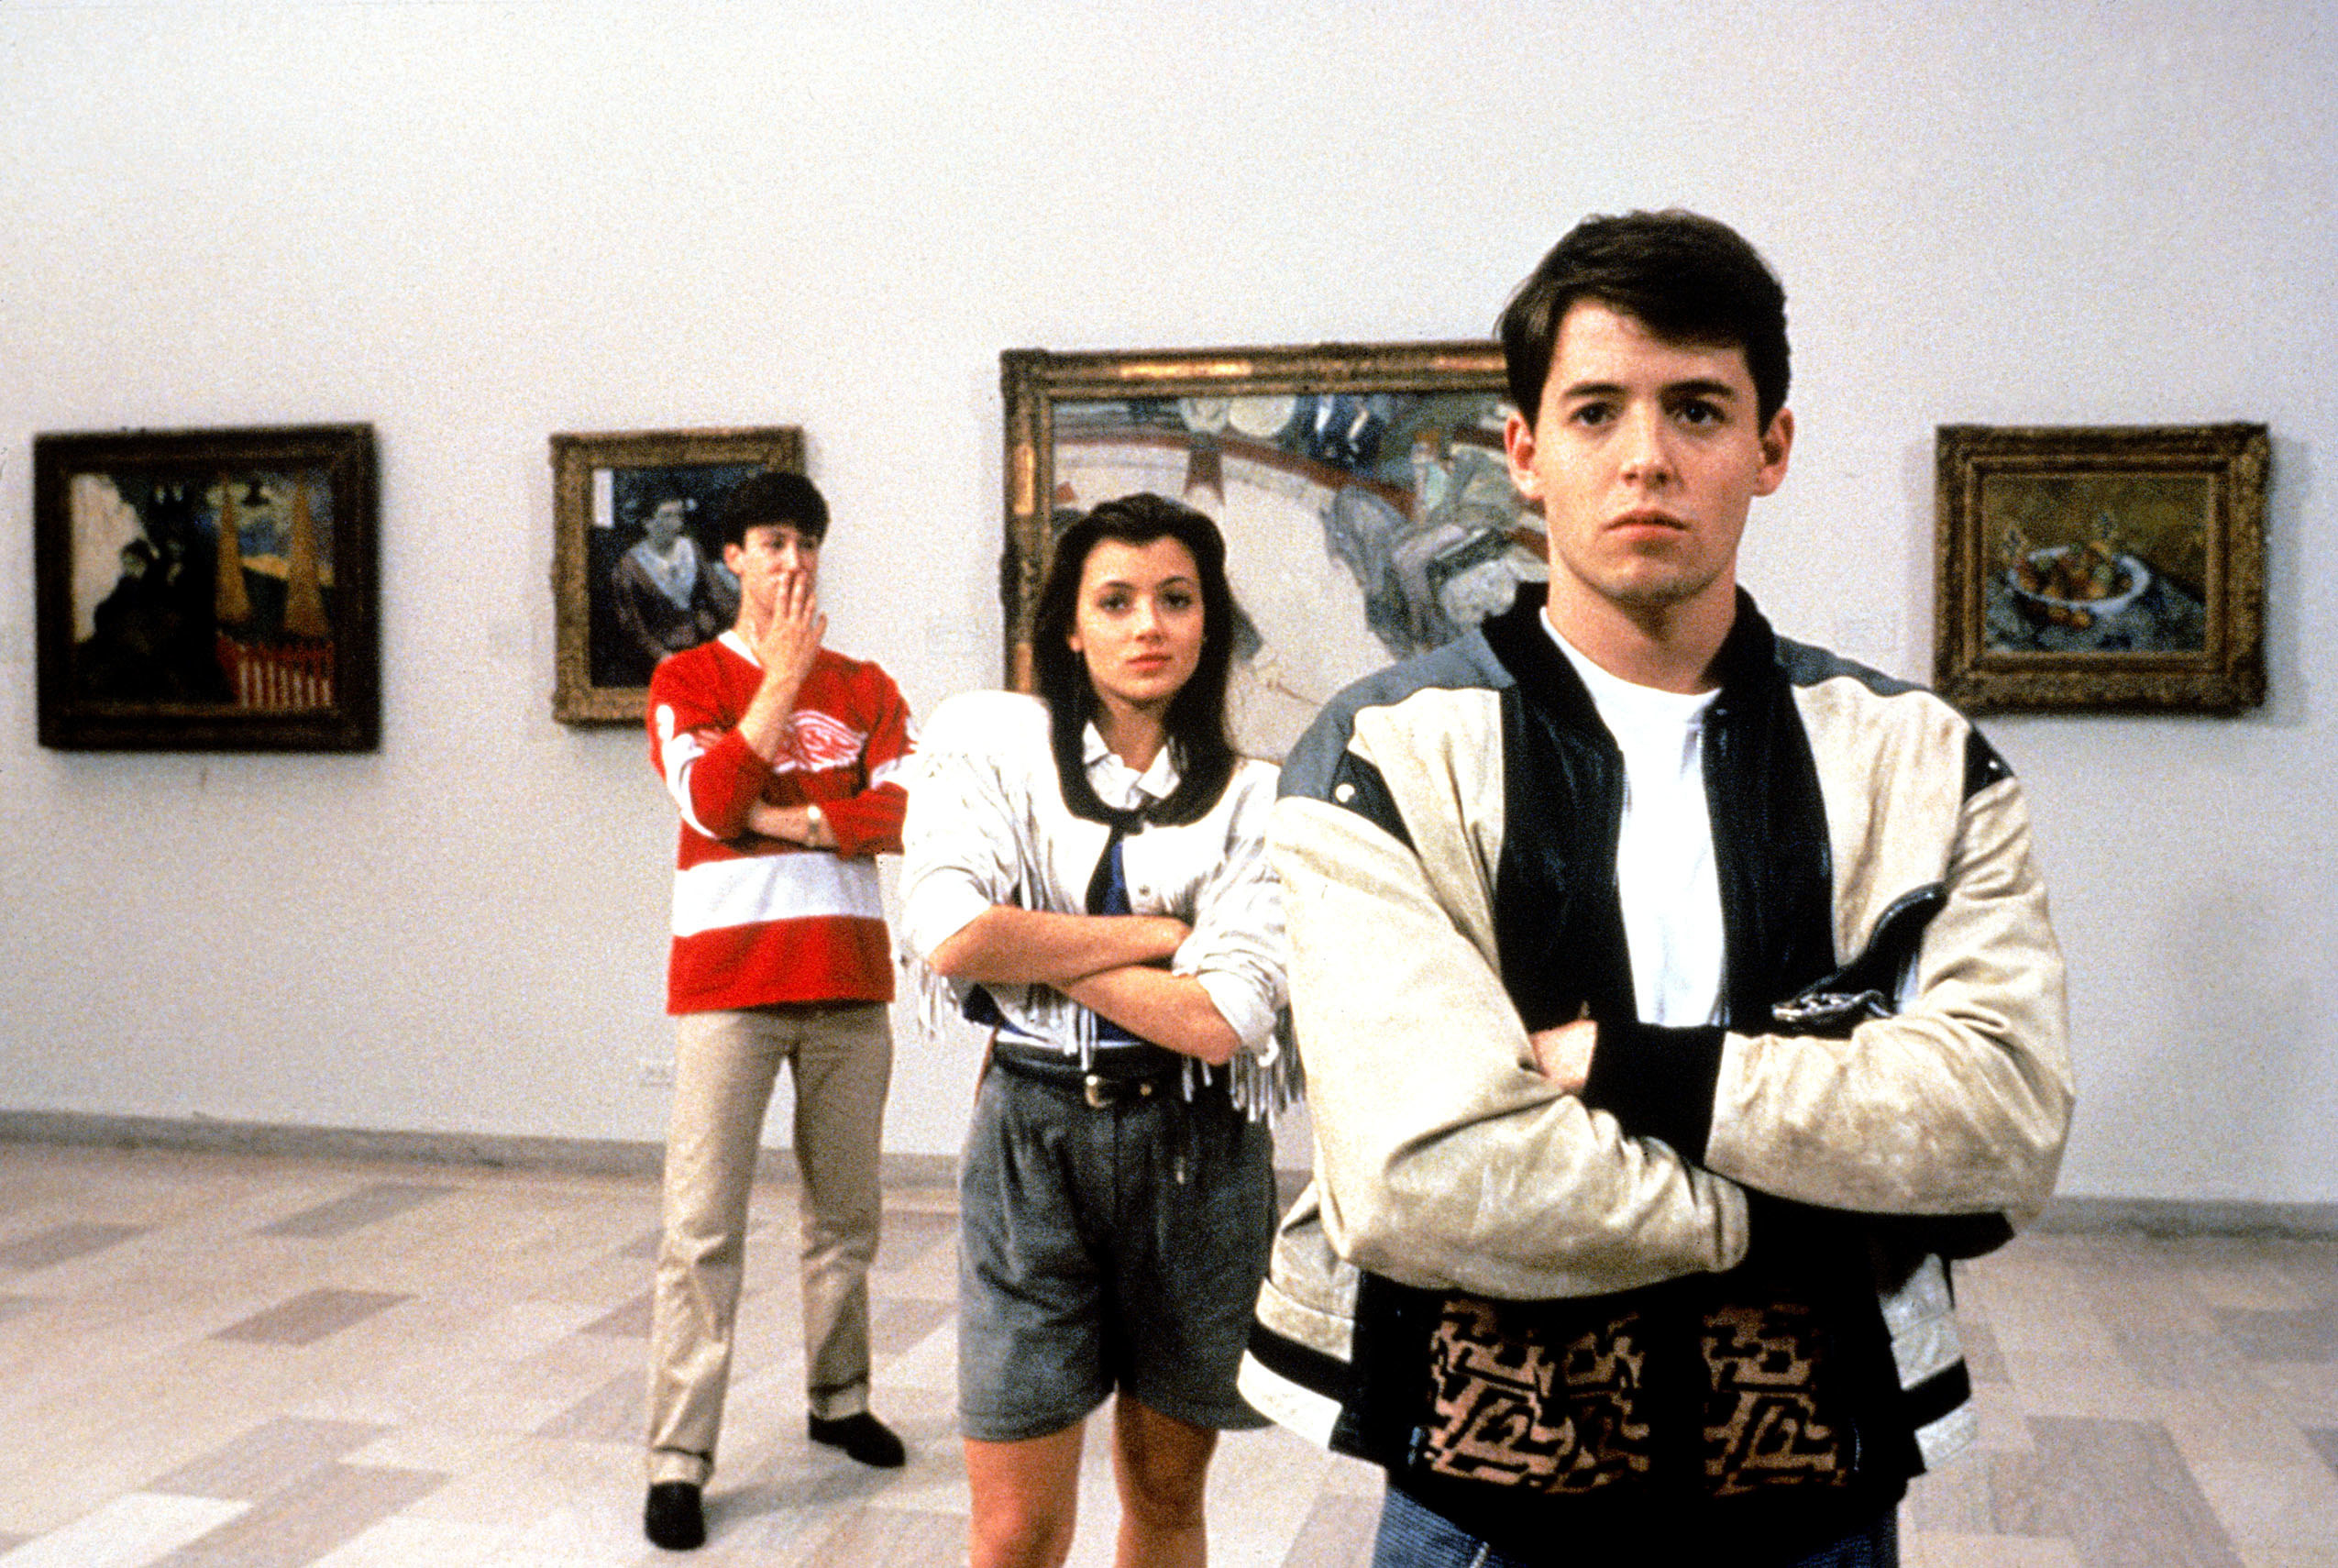 ferris bueller and his friends at an art museum